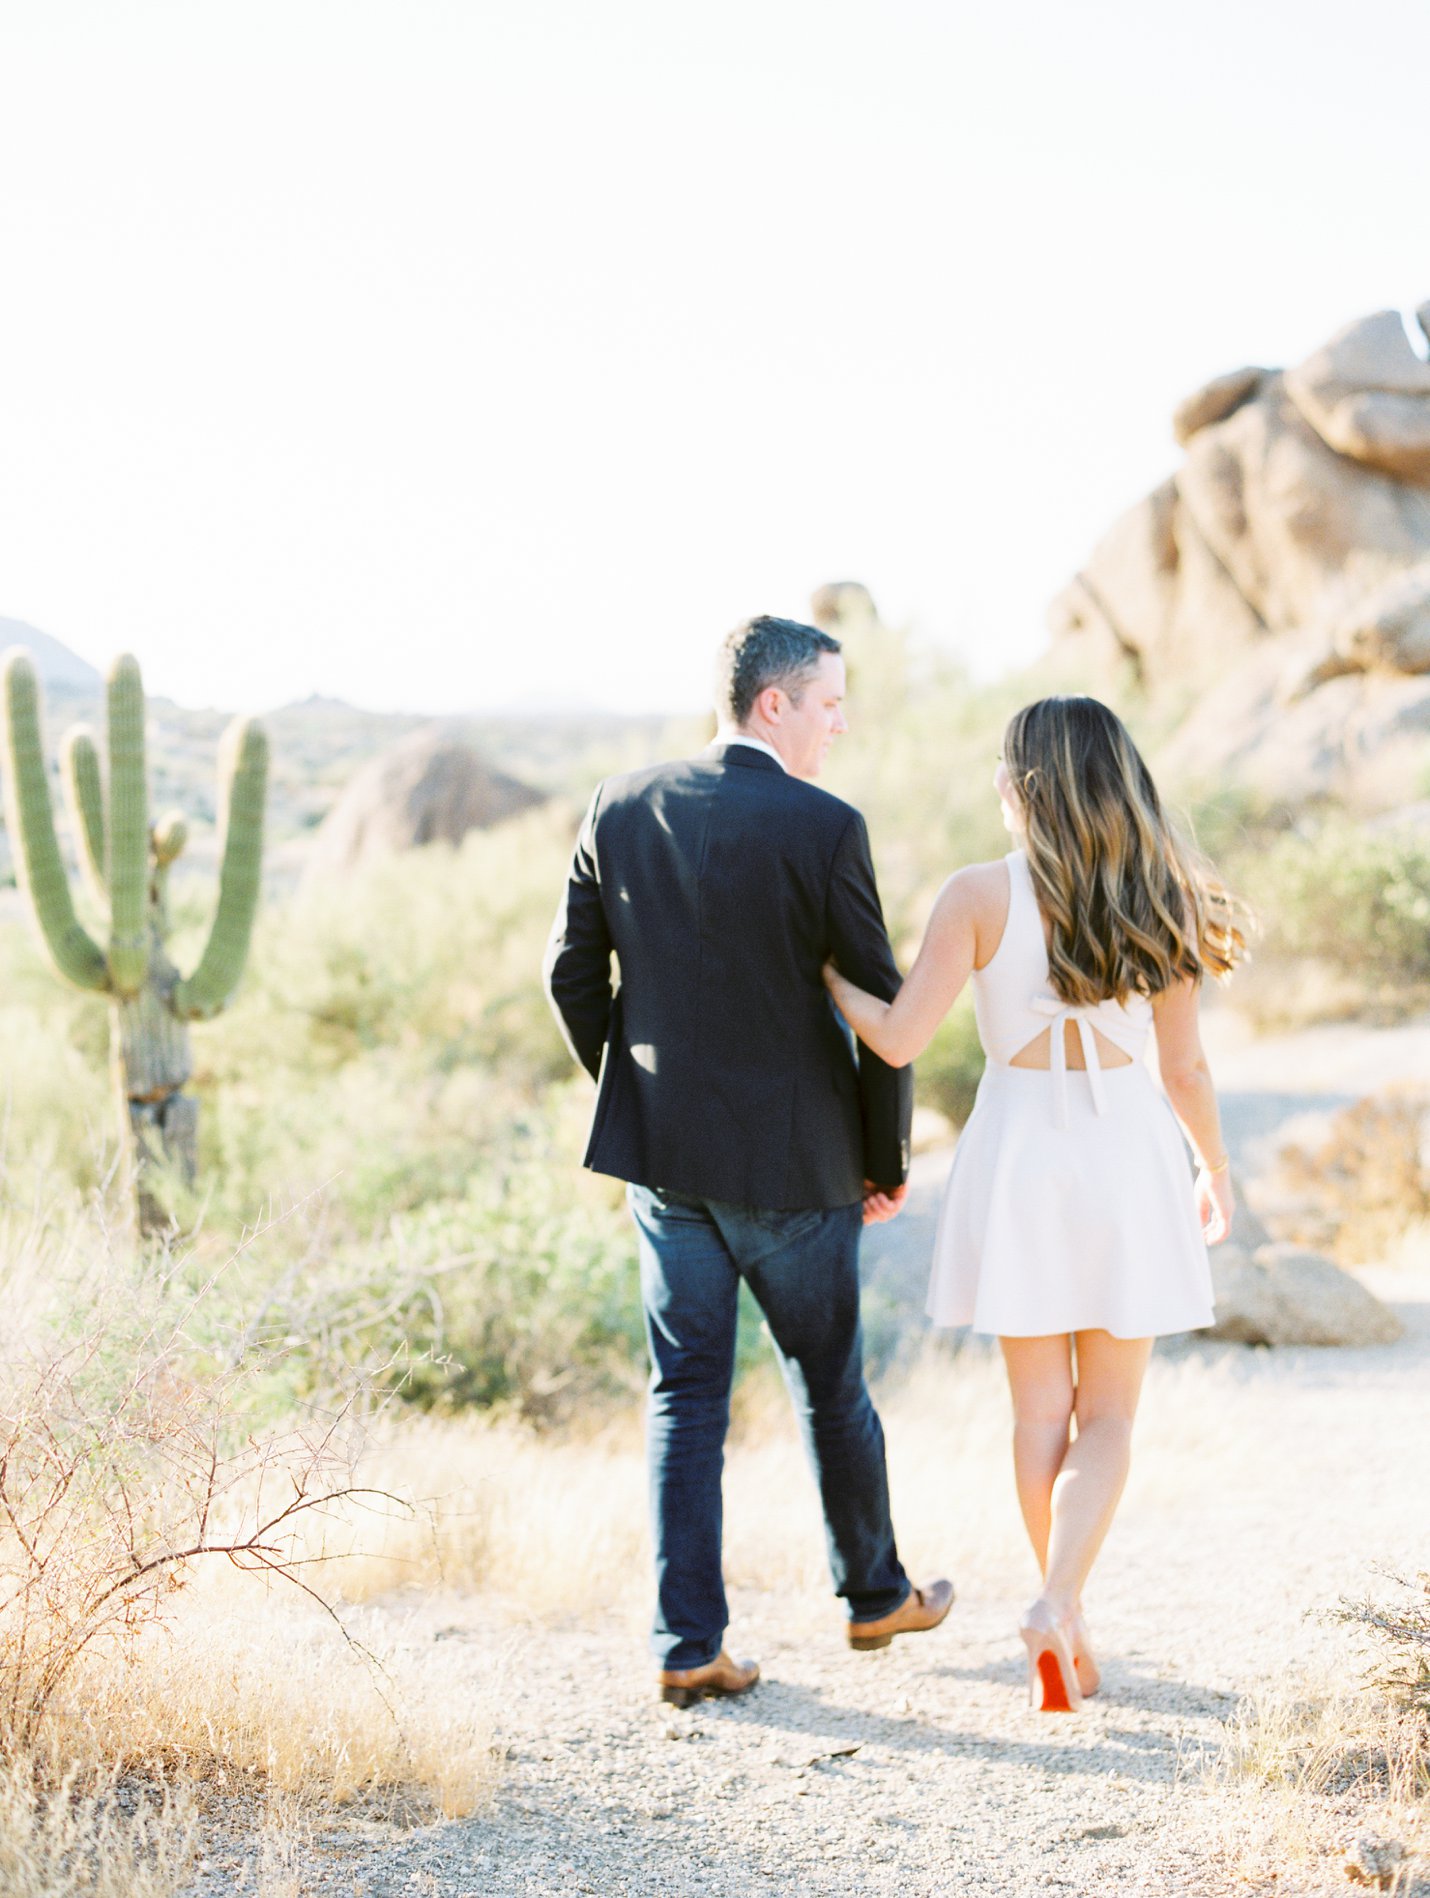 Arizona desert engagement photos - Rachel Solomon Photography